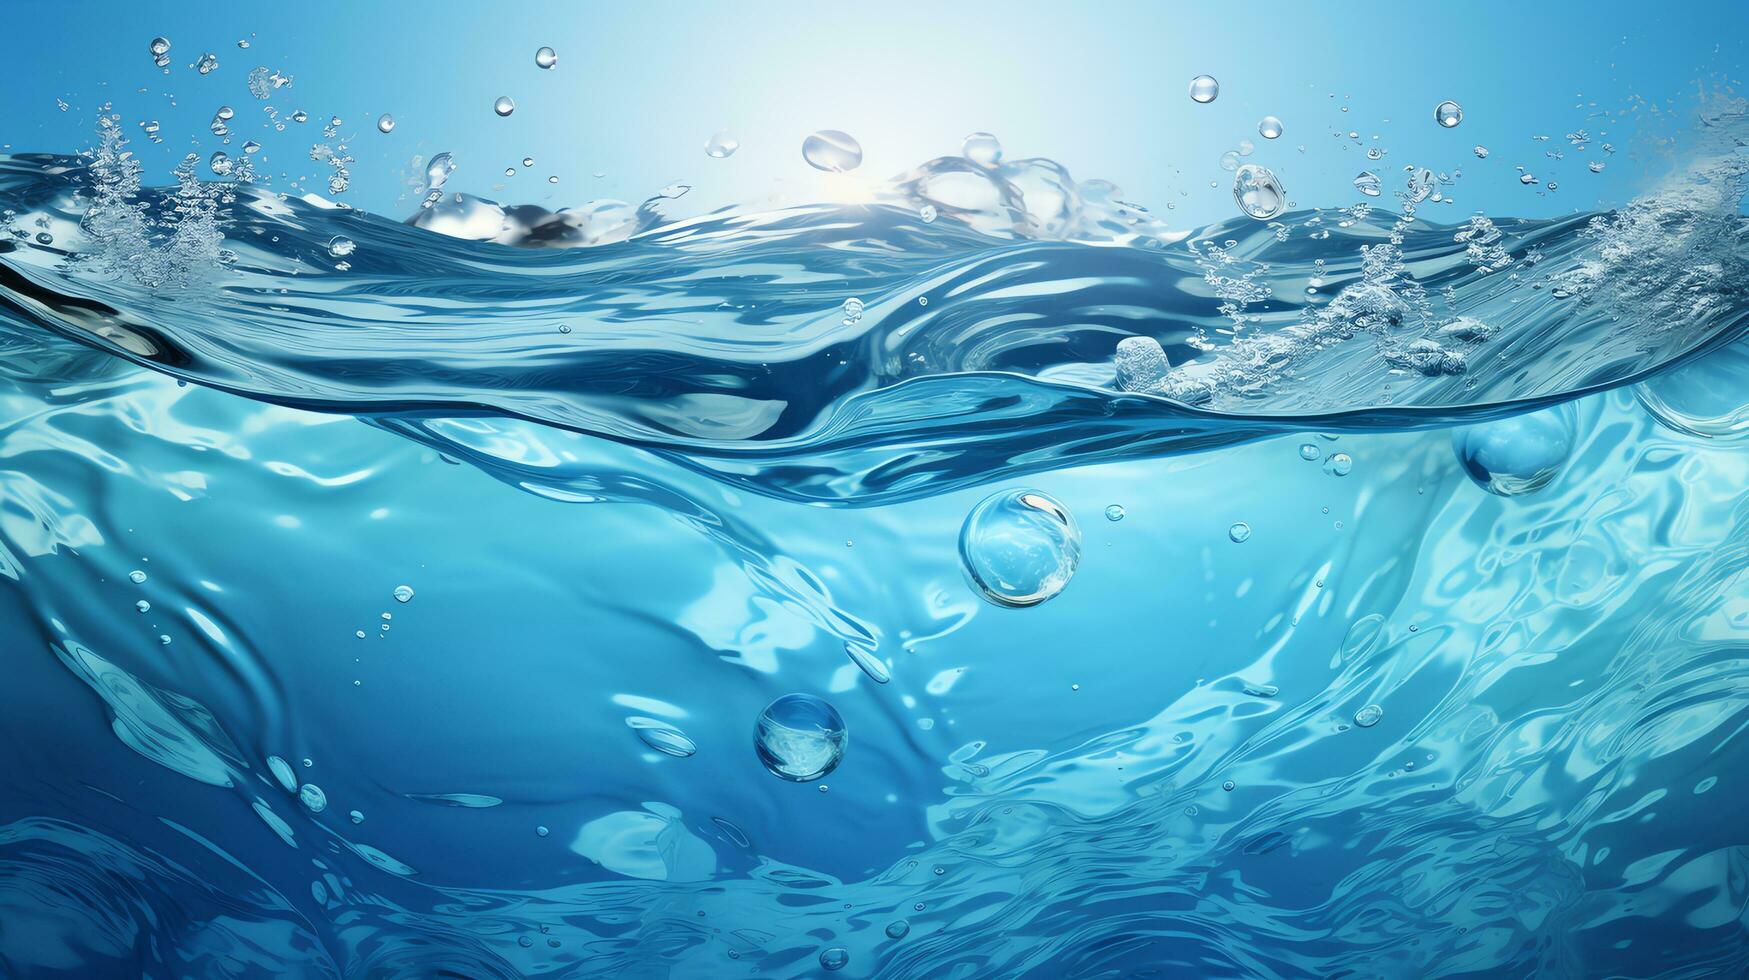 Water splash in the pool Generate AI photo